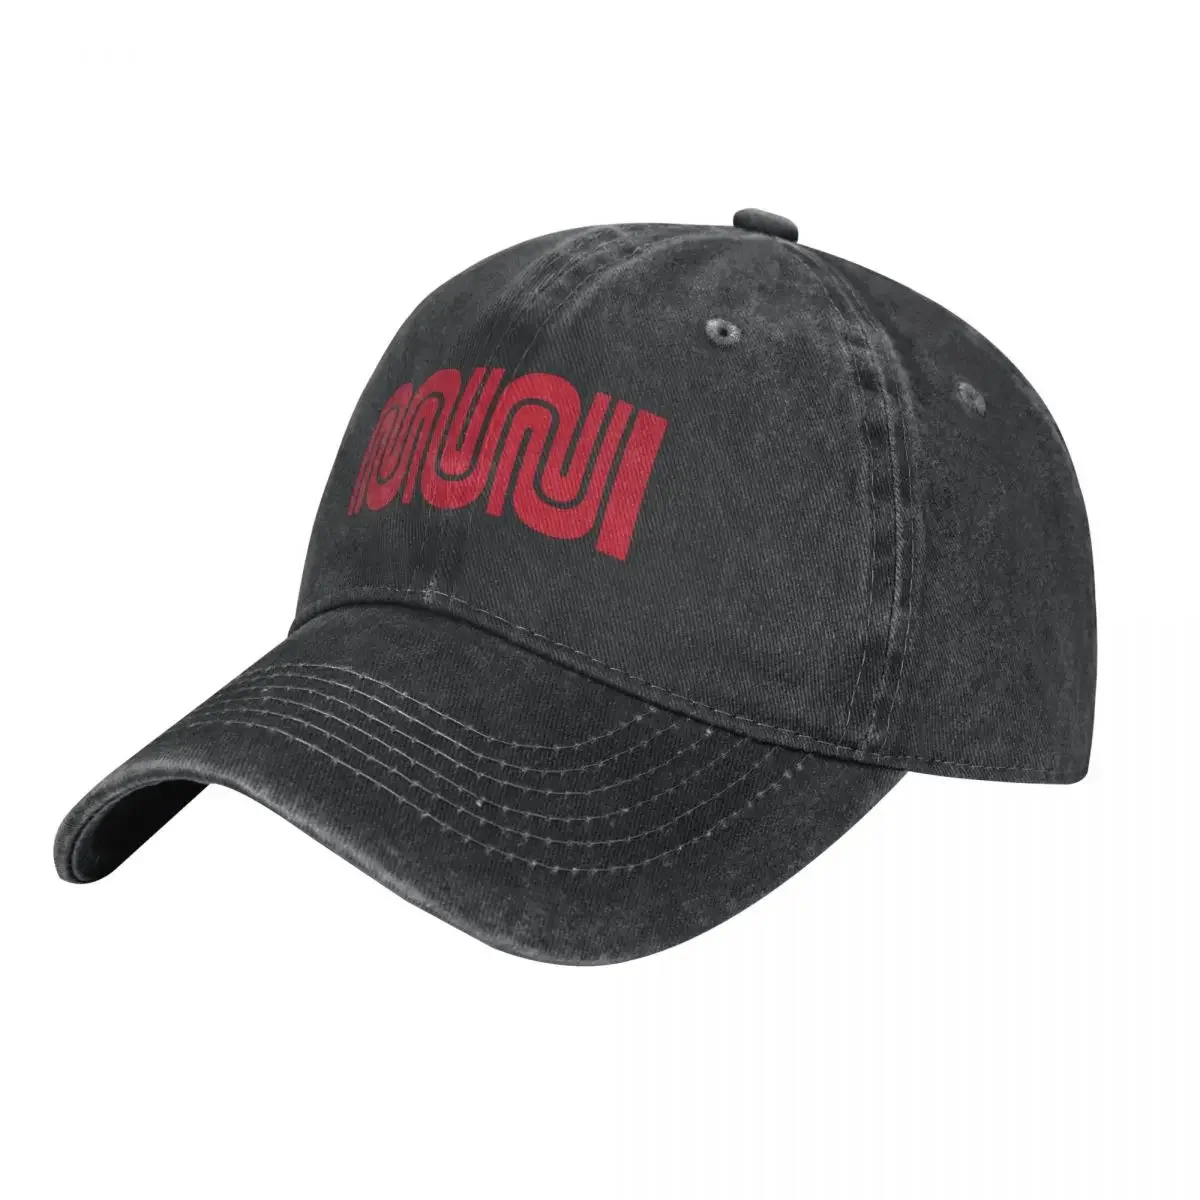 

Muni Worm - SF ICONS Cowboy Hat Trucker Cap Dropshipping black derby hat Women Beach Fashion Men's